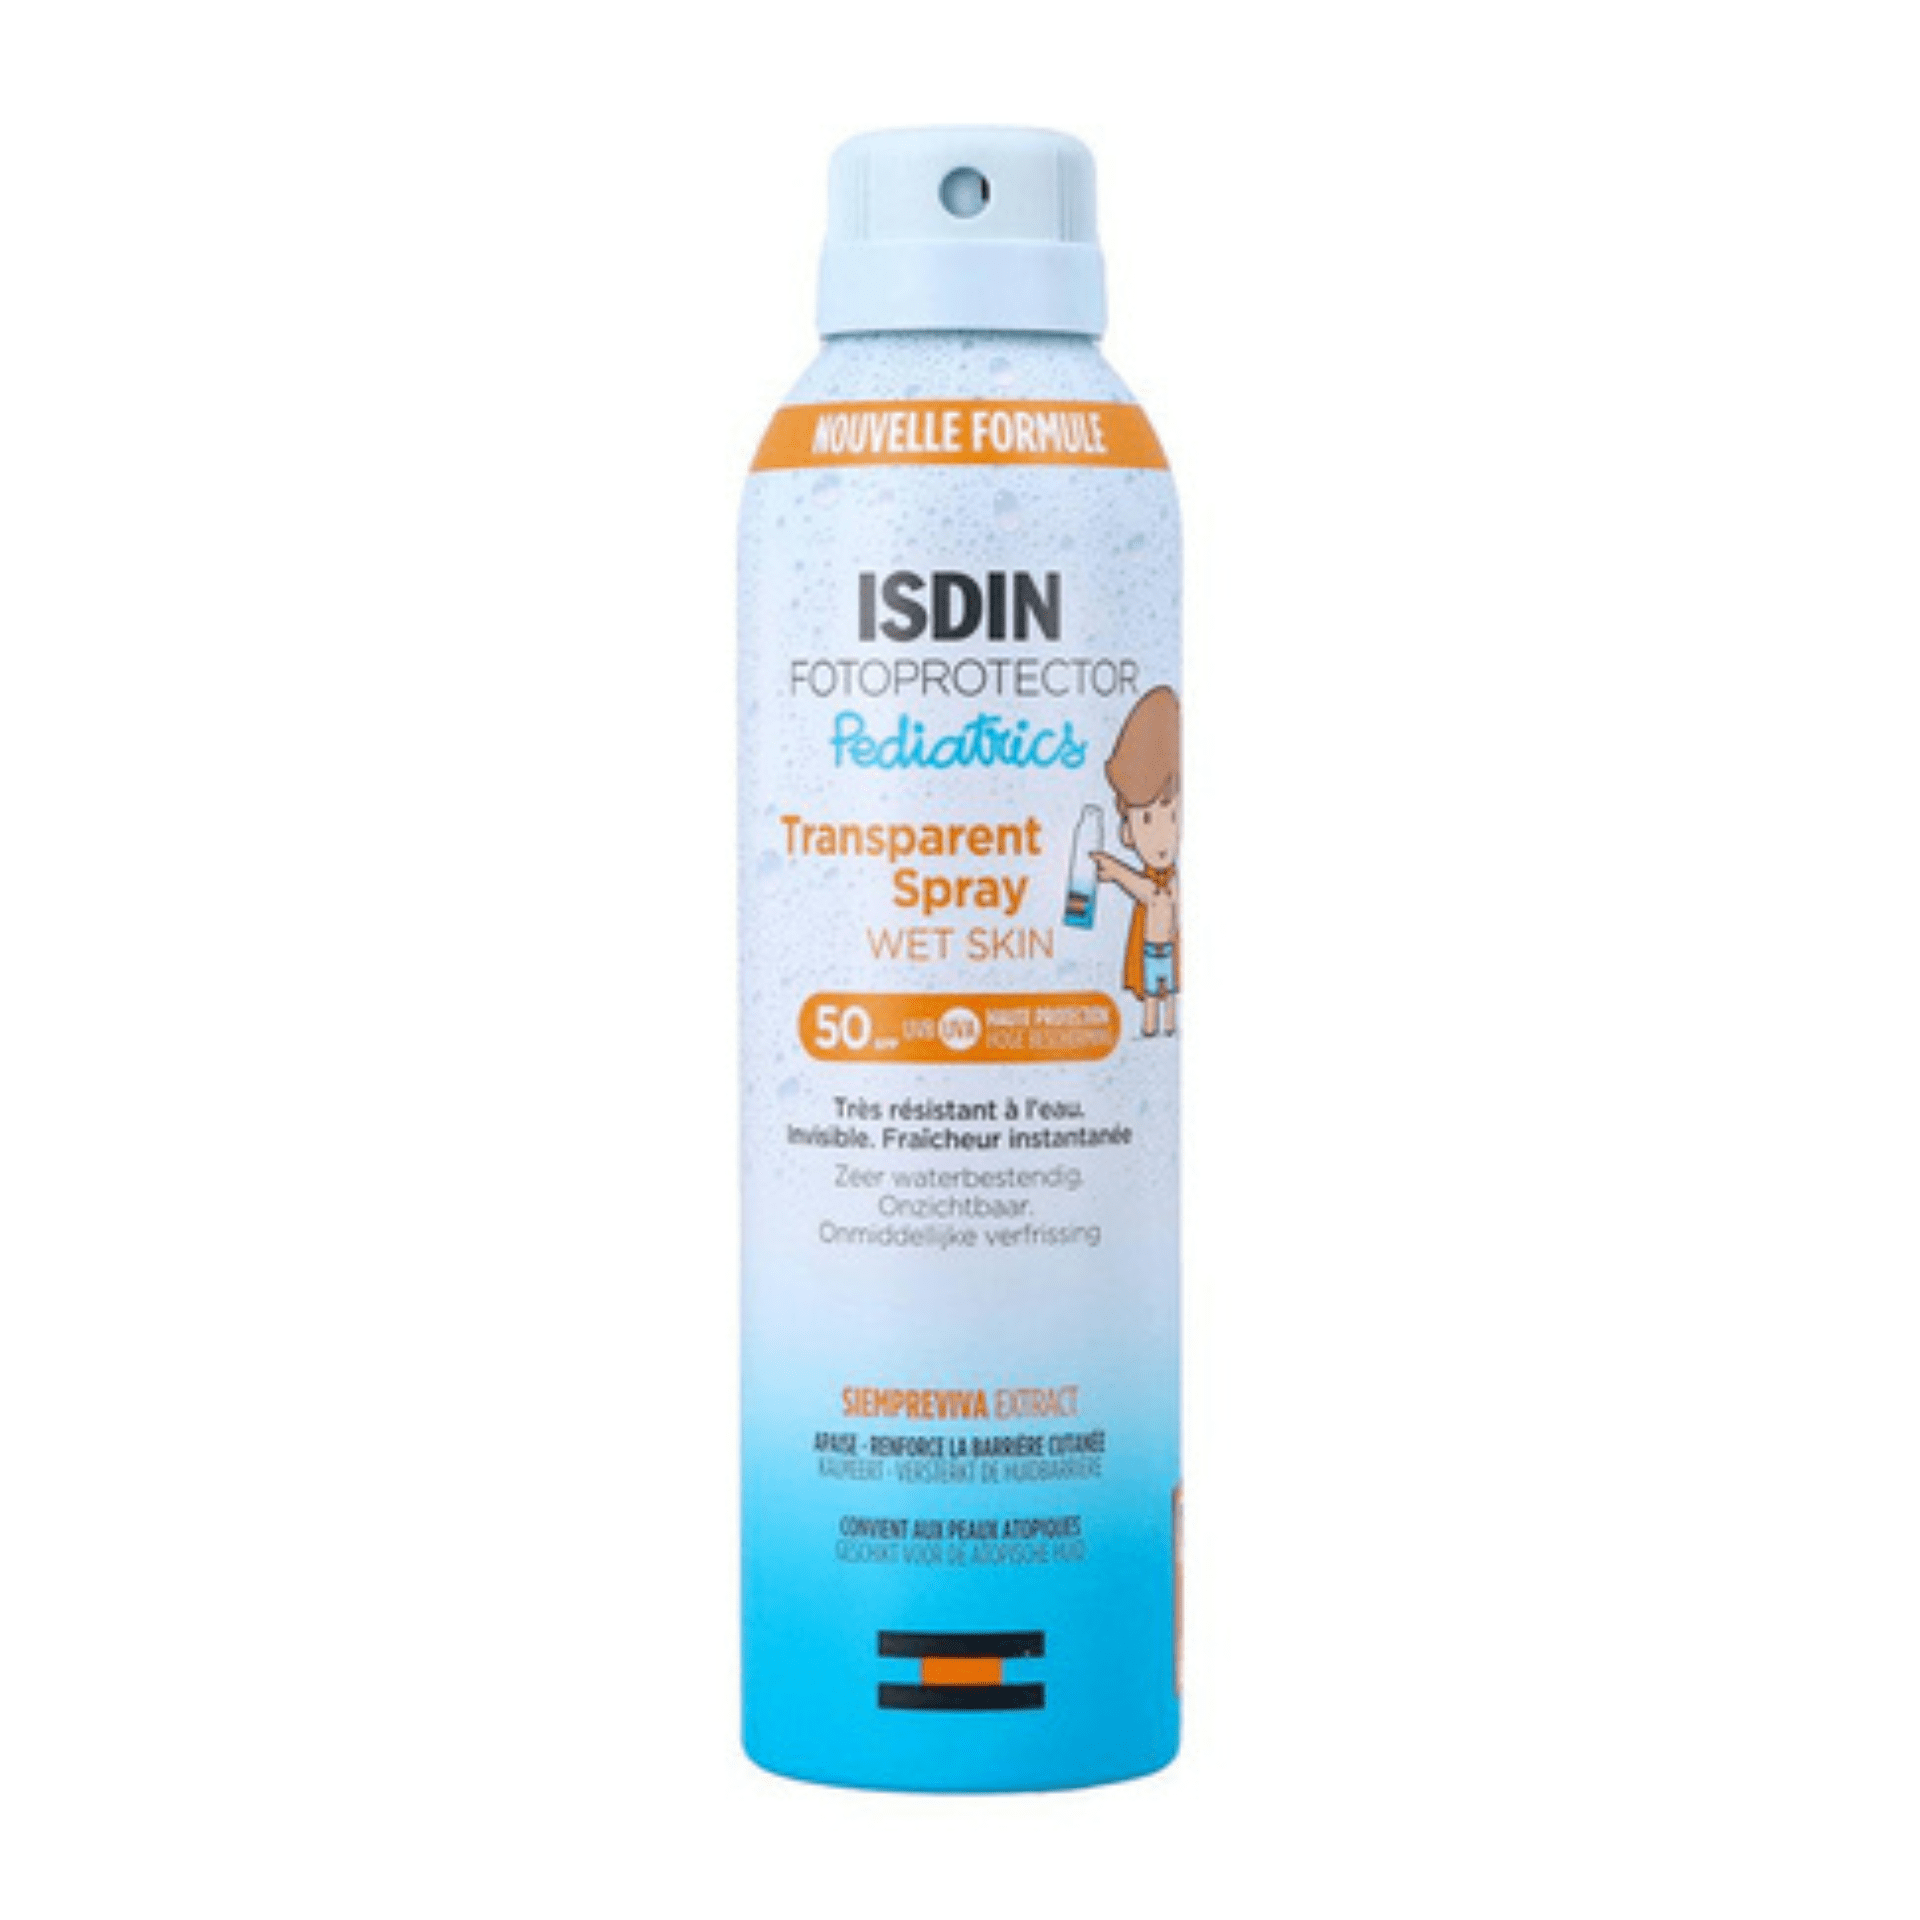 Isdin Fotoprotector Pediatrics Transparent Spray SPF 50